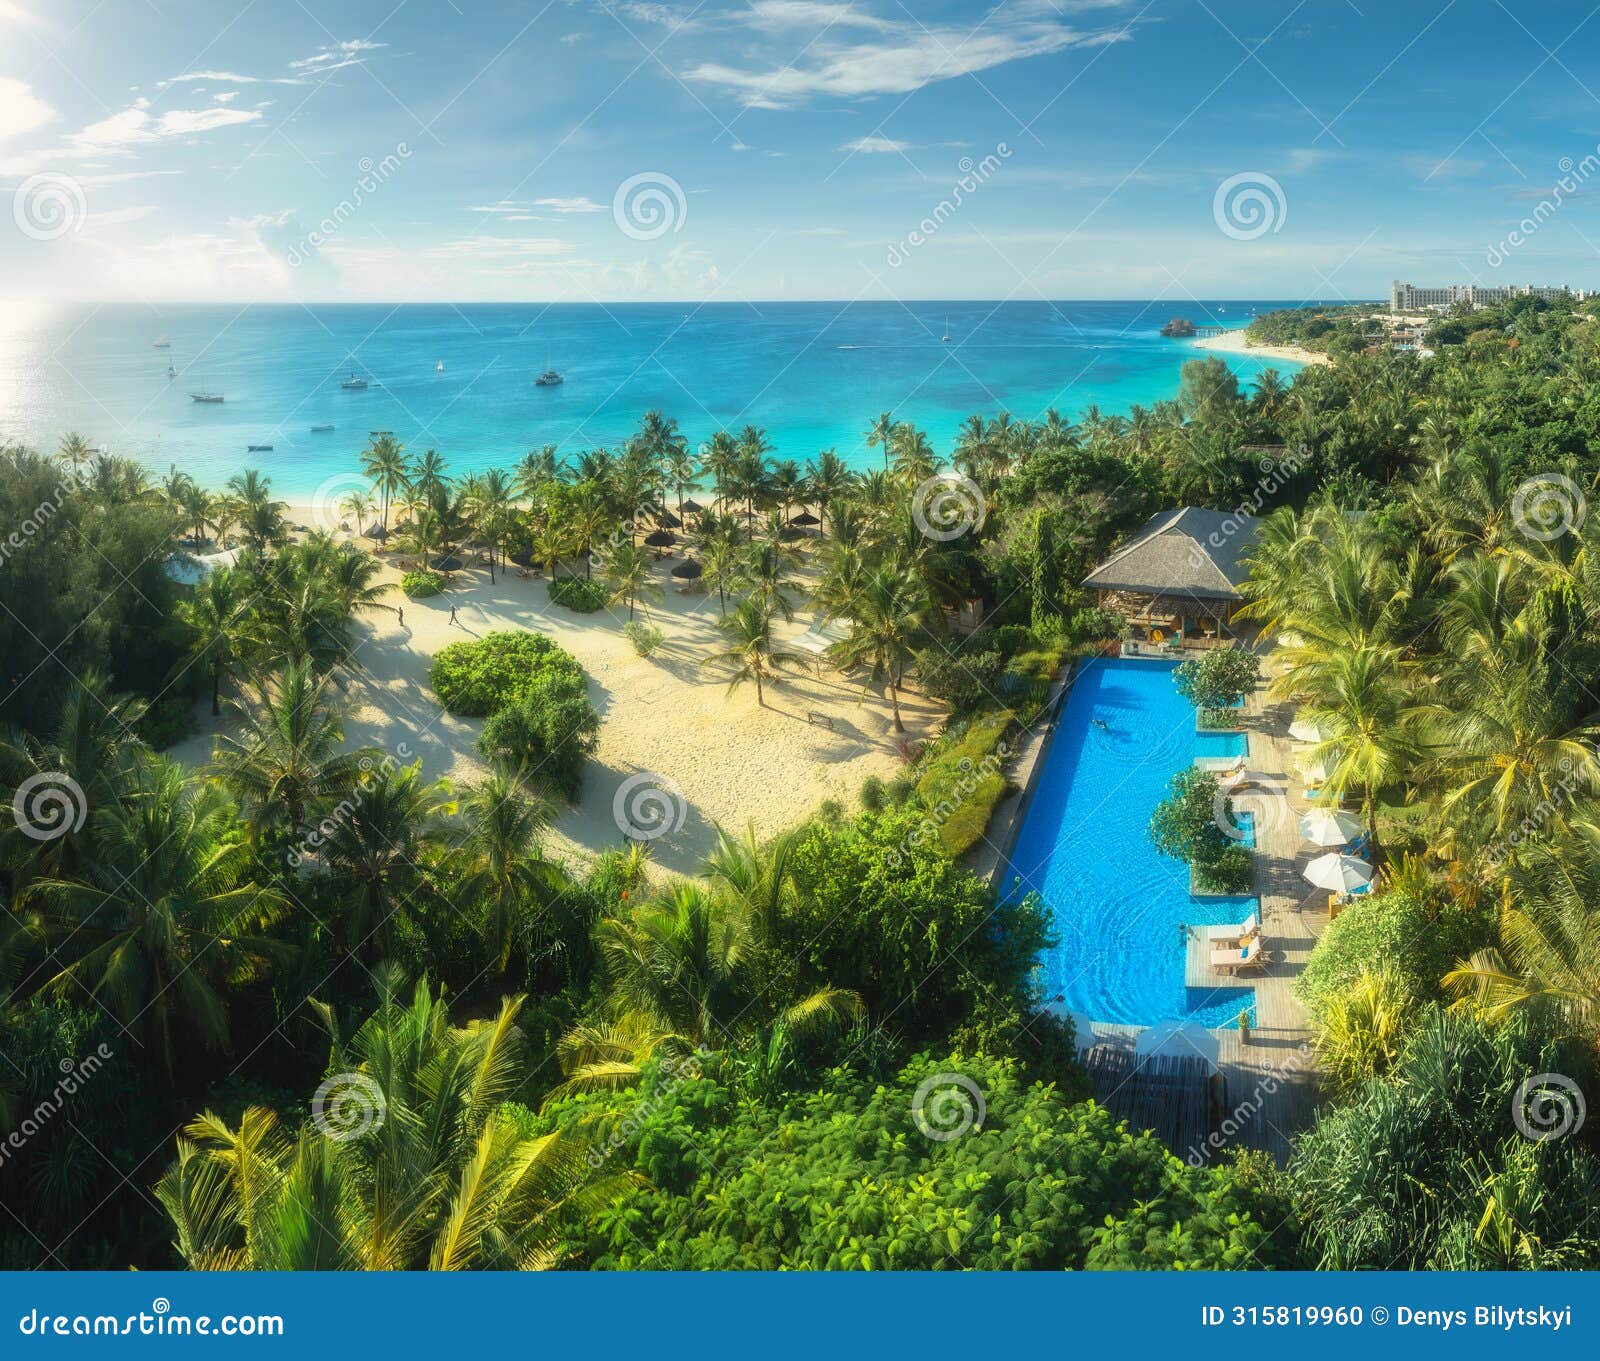 aerial view of palms, pool, bungalow, sandy beach, blue sea